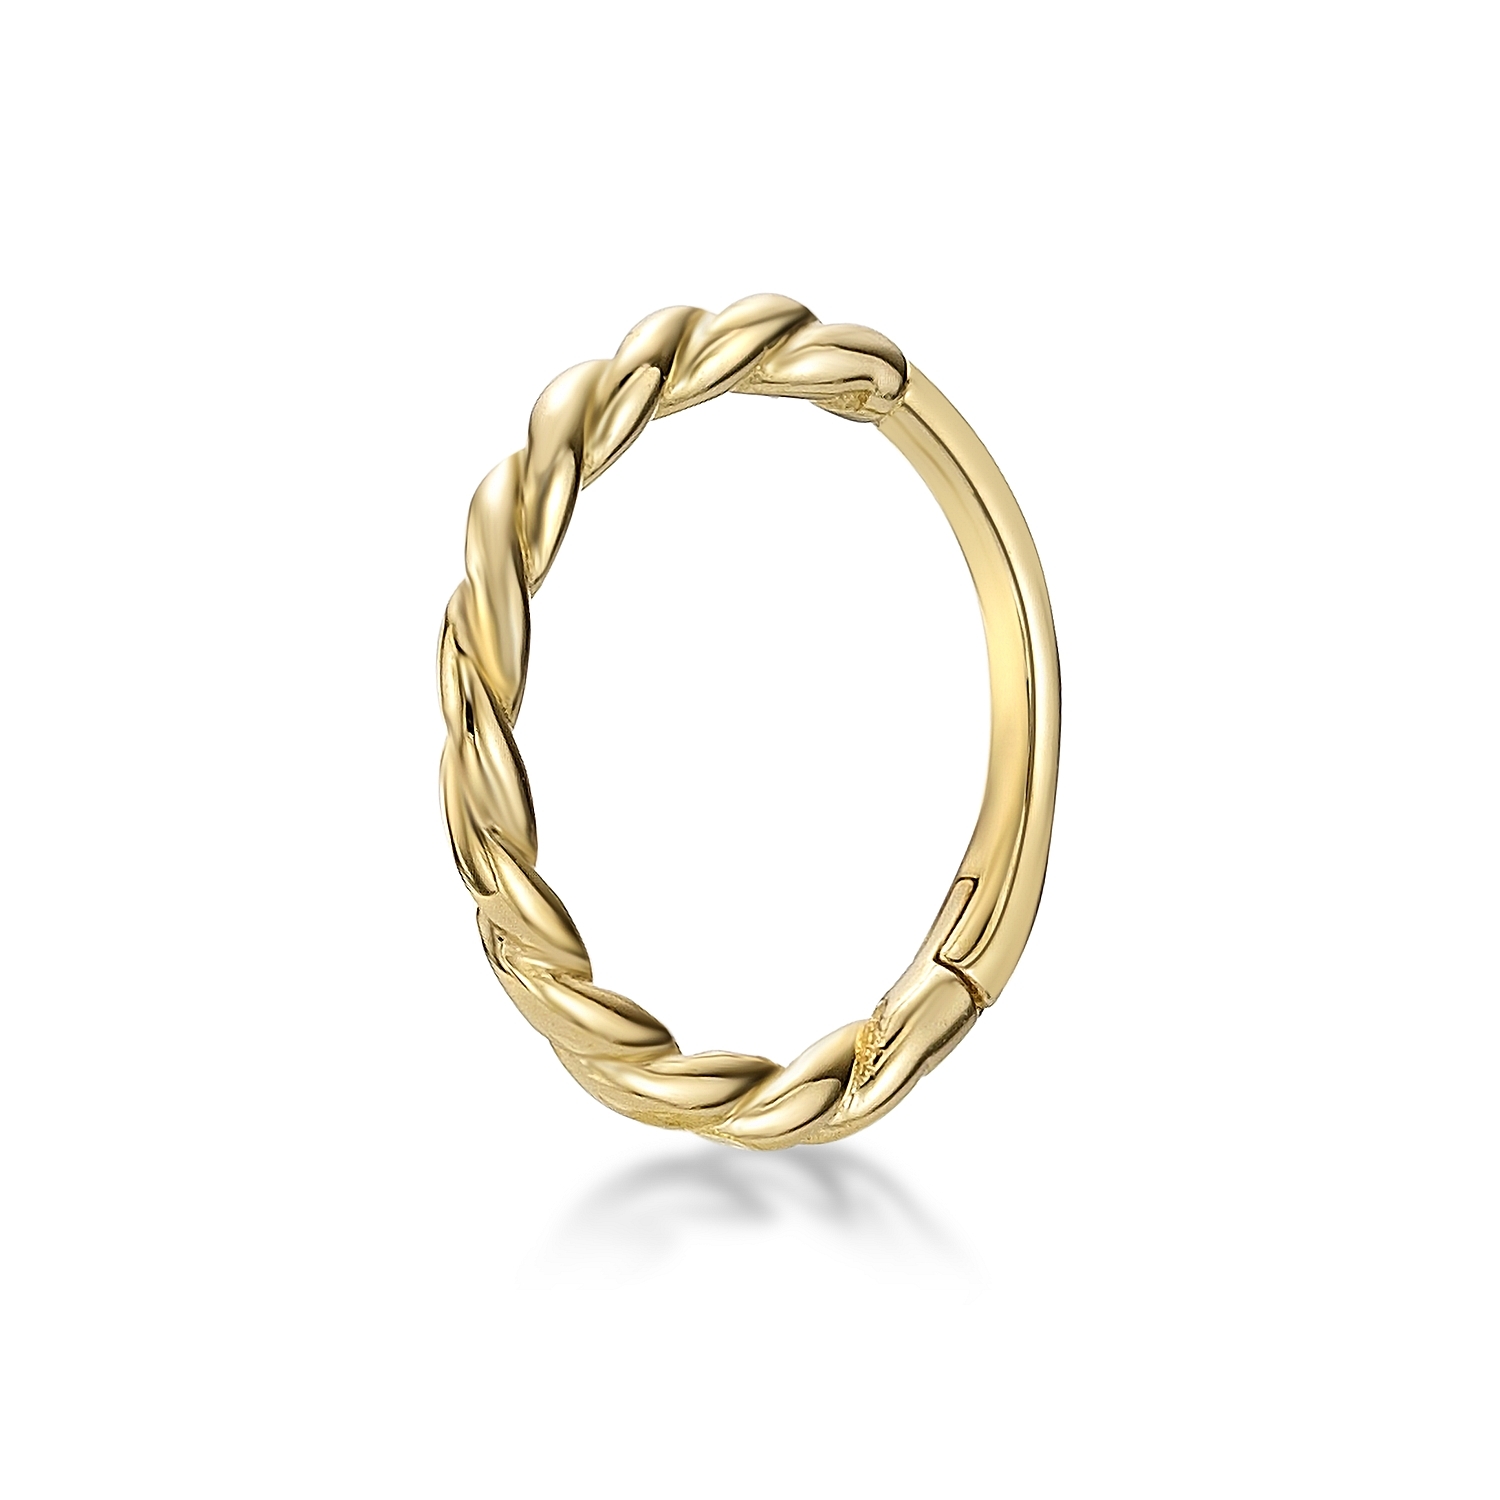 Lavari Jewelers Women's 10 MM Braid Design Hoop Nose Ring with Multi-Purpose Clicker, 14K Yellow Gold, 20 Gauge